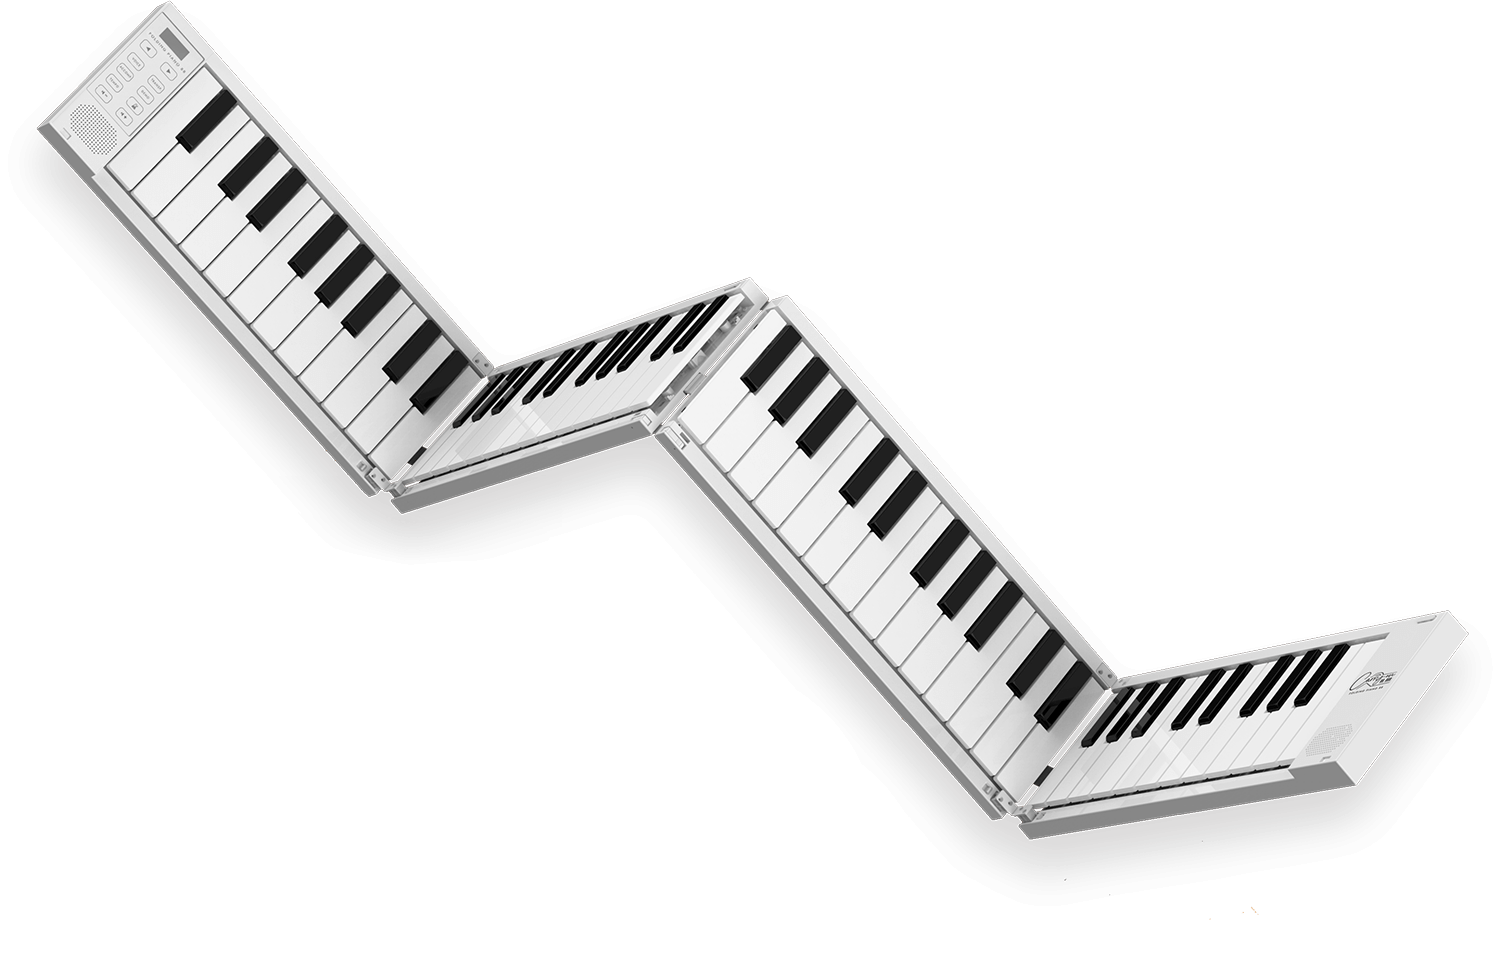 Small Portable Piano for Sale, Foldable